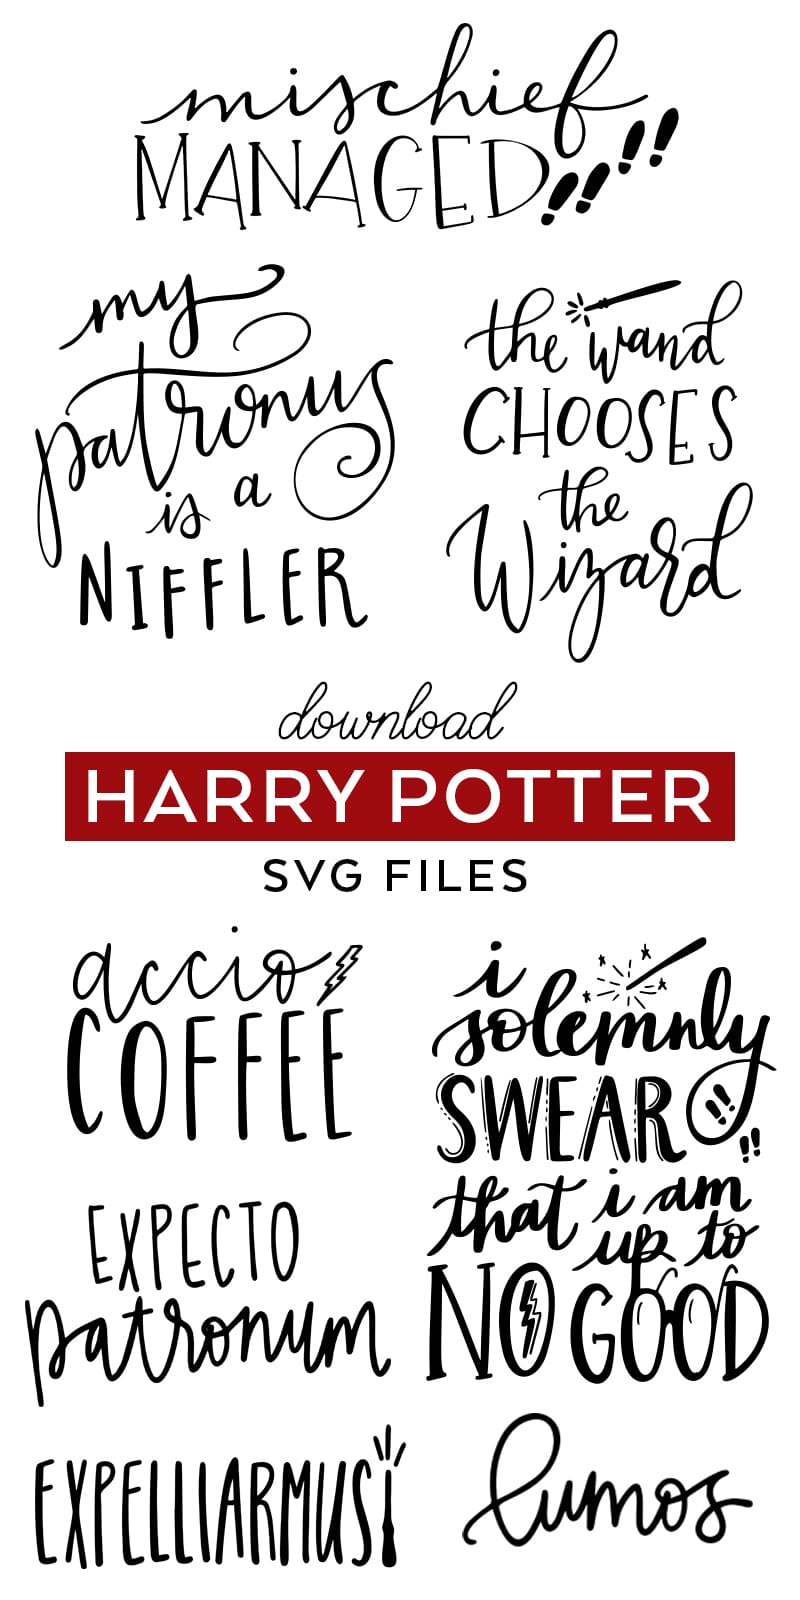 Harry Potter SVG Files - Cricut & Silhouette Cut Files - Pineapple